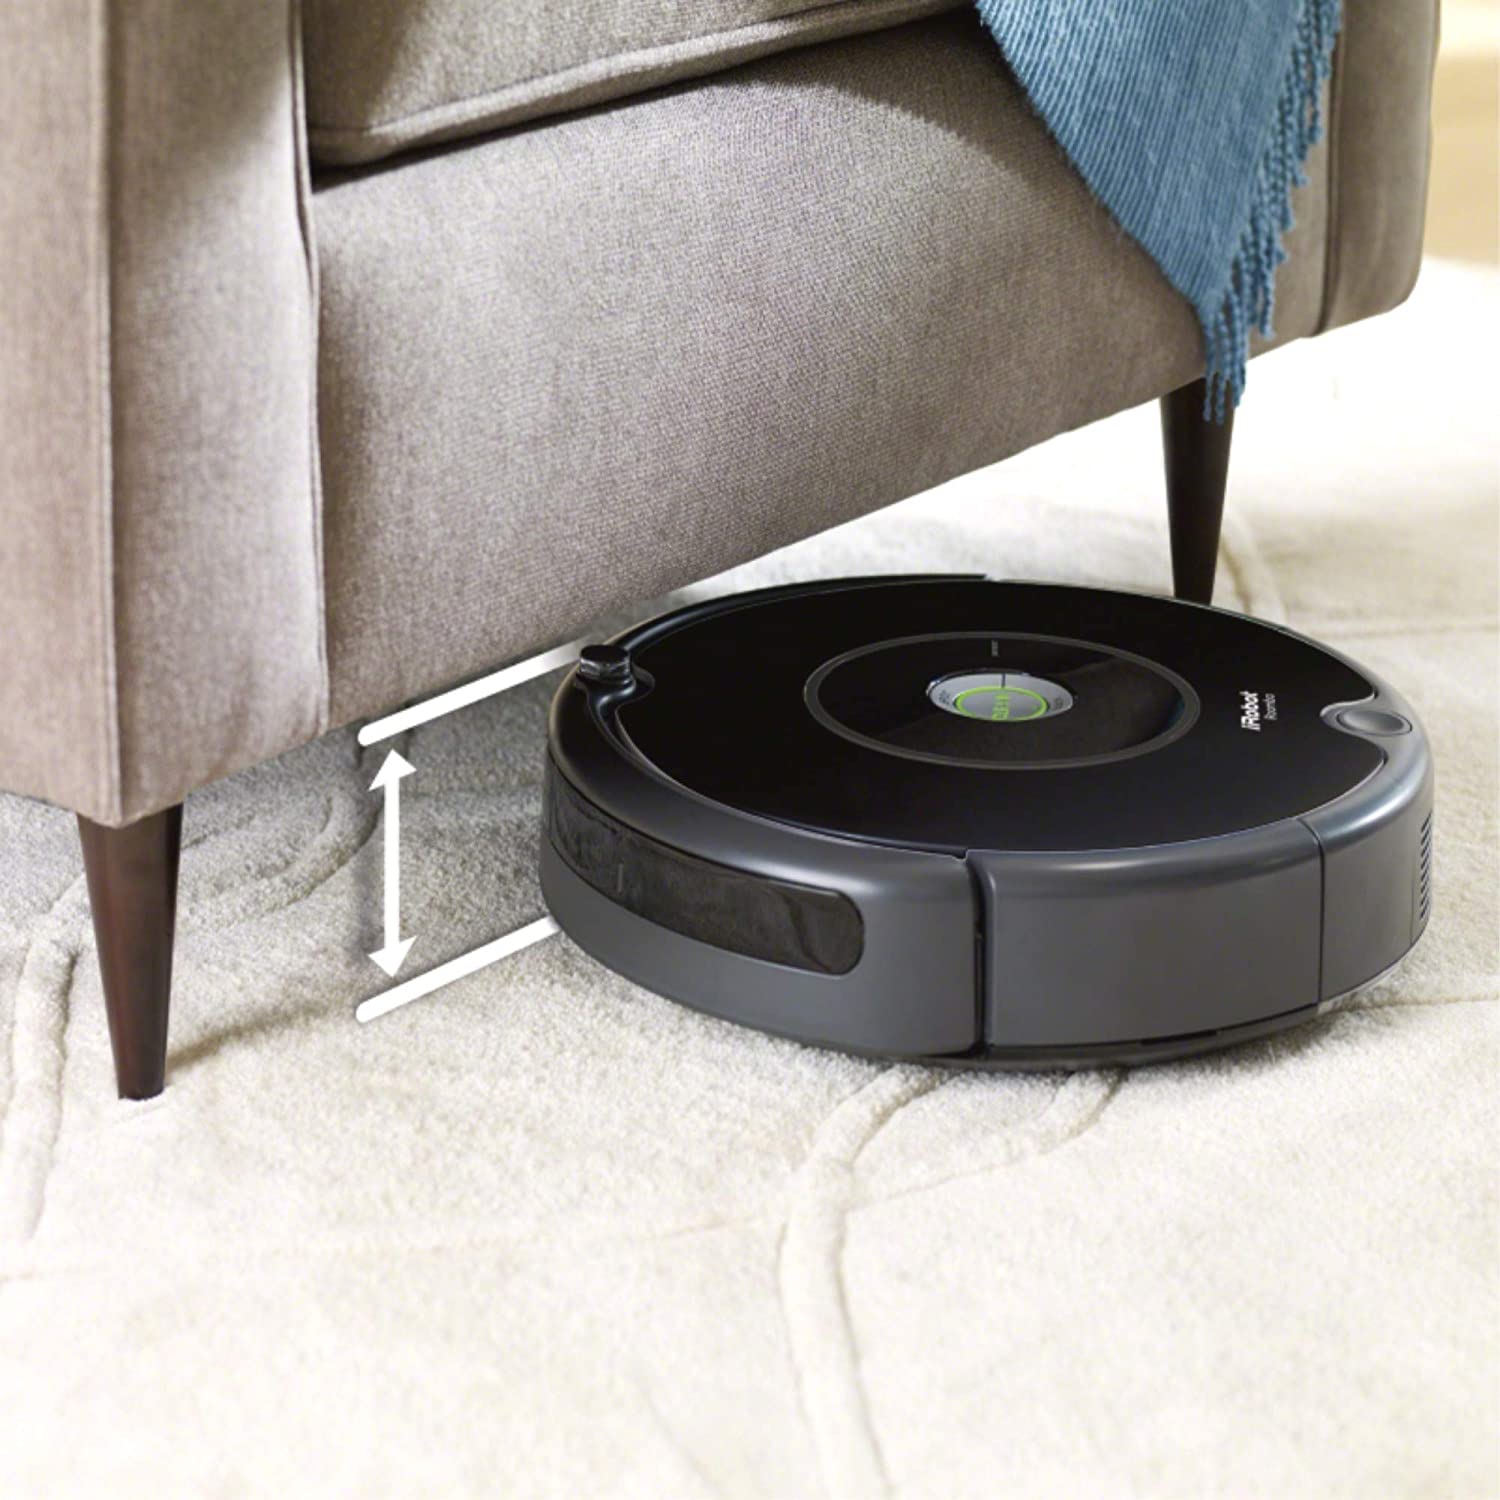 iRobot Roomba 606 Vacuum Cleaning Robot